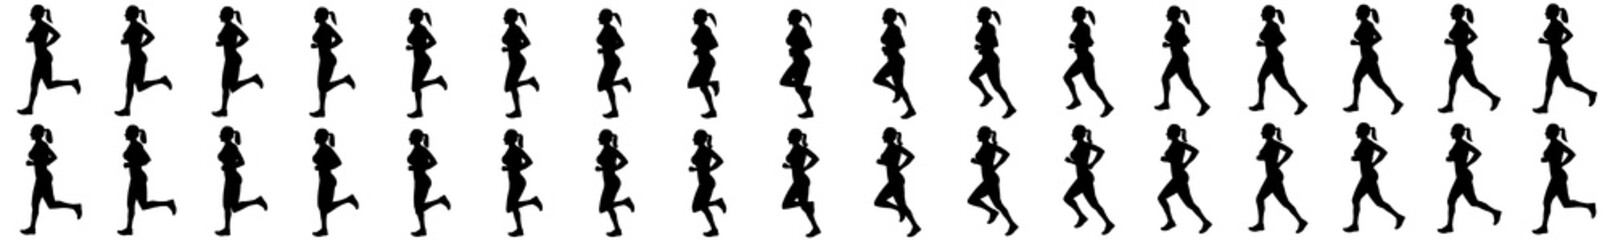 Girl Run Cycle Animation Sprite Sheet, jogging, Running, Silhouette